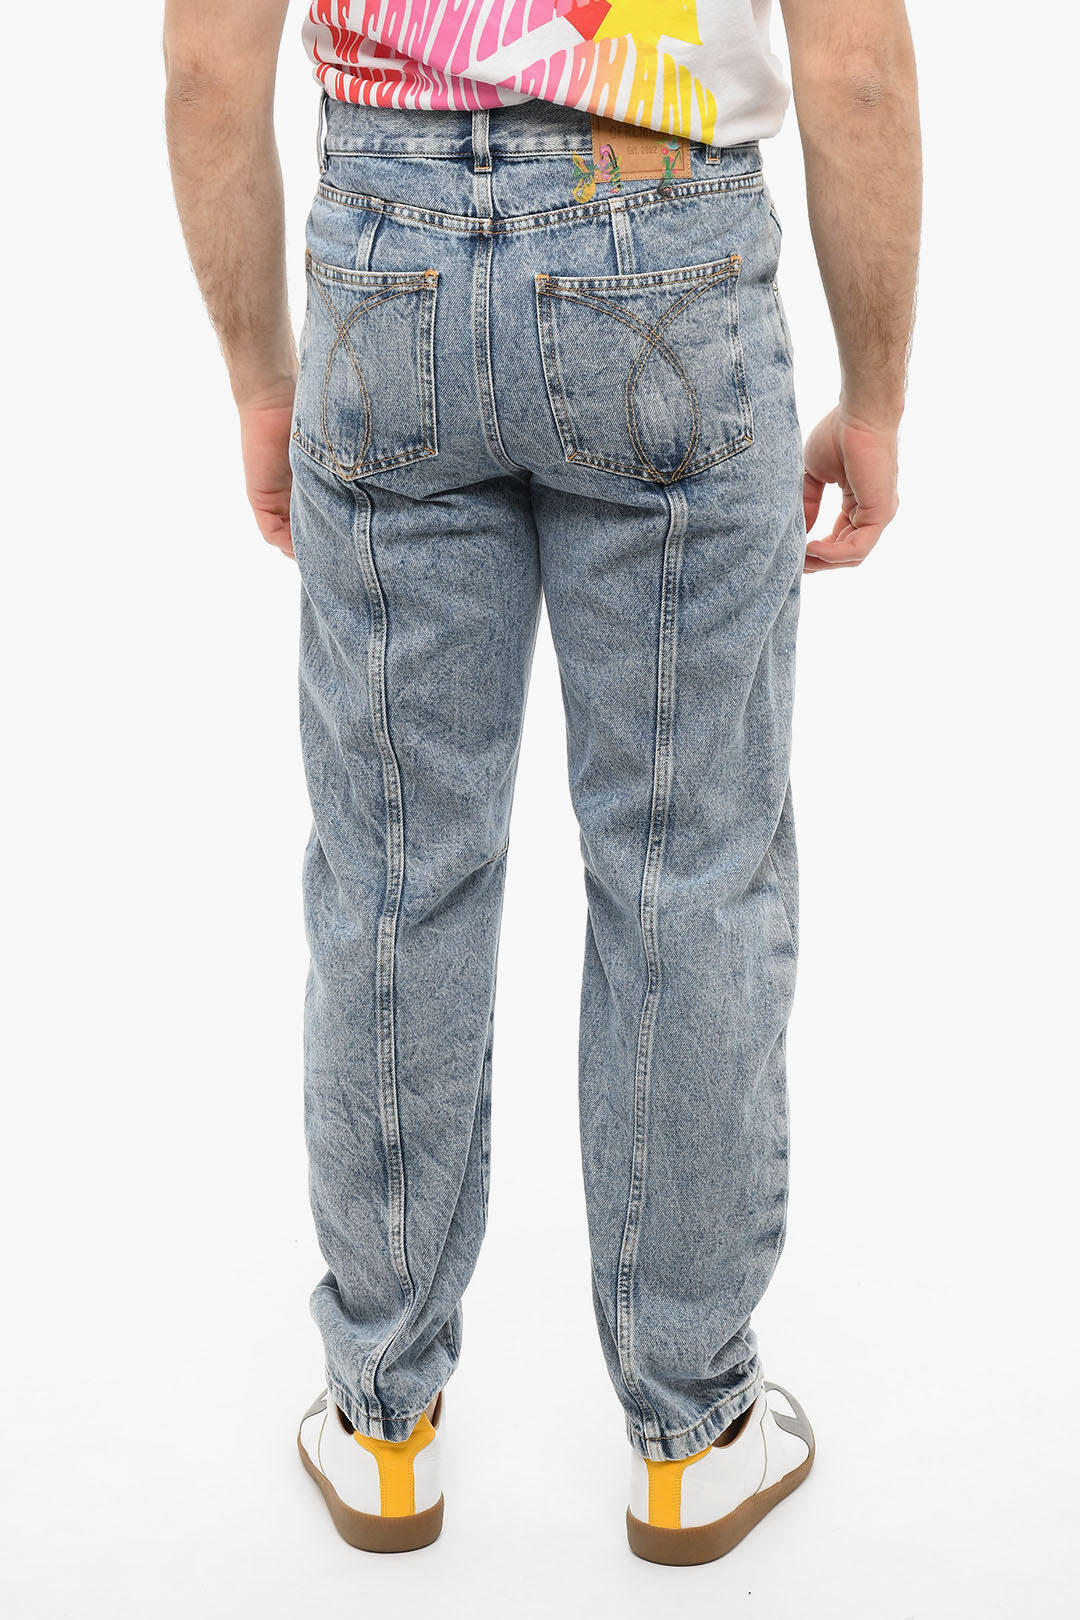 Old Navy Blue Regular Fit Jeans Mens Size 40x30 Straight Leg Dark Wash  Denim NWT